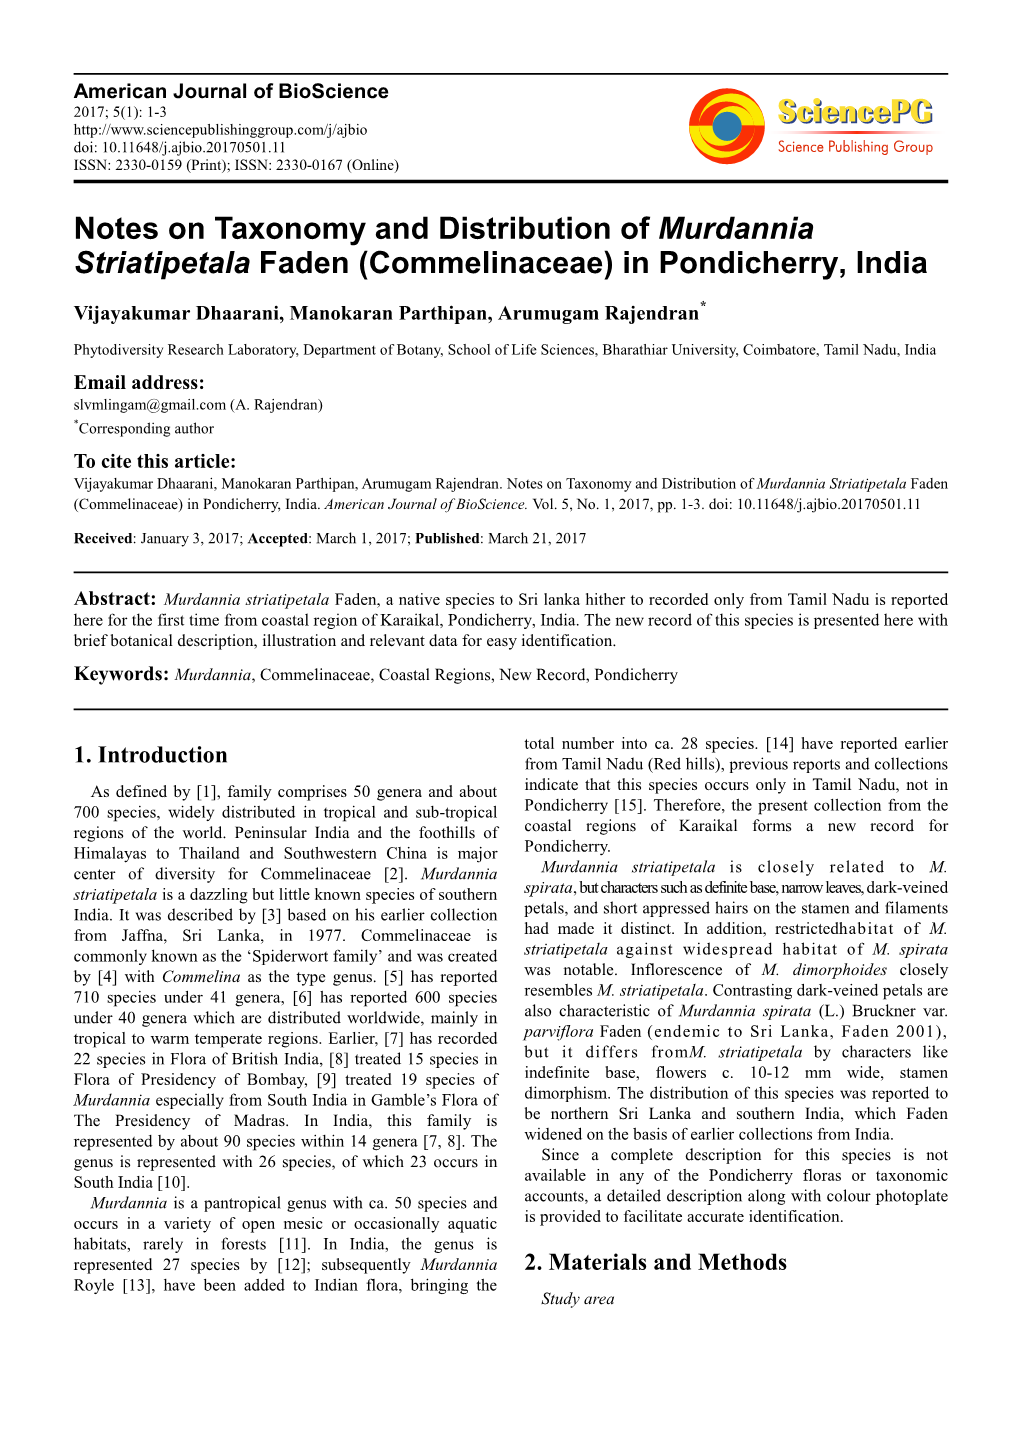 Notes on Taxonomy and Distribution of Murdannia Striatipetala Faden (Commelinaceae) in Pondicherry, India